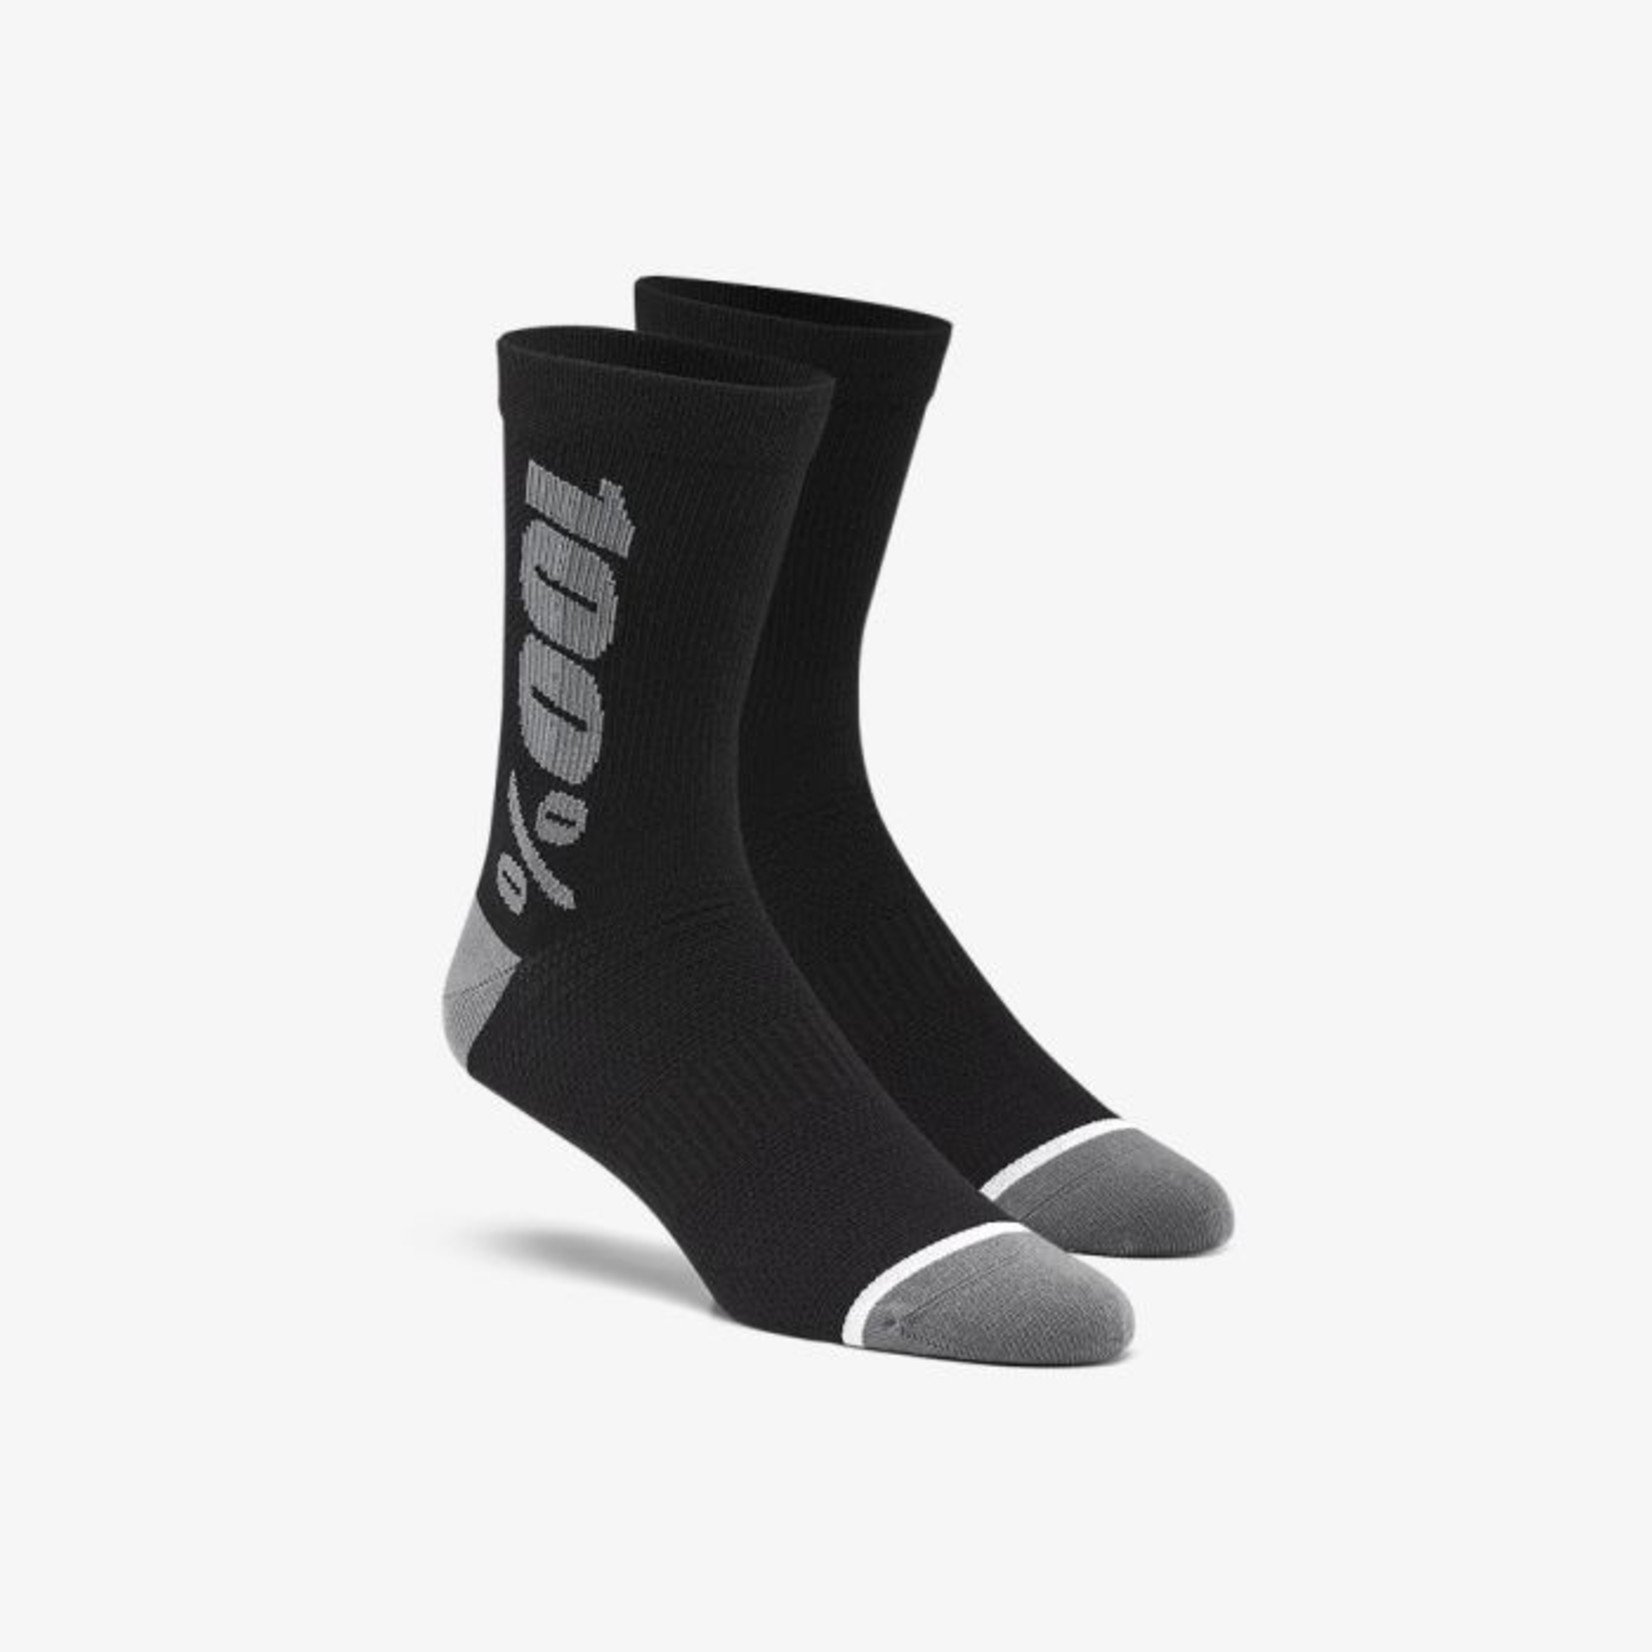 100% Rythym Merino Wool Performance Bike Gear Socks - Black/Grey